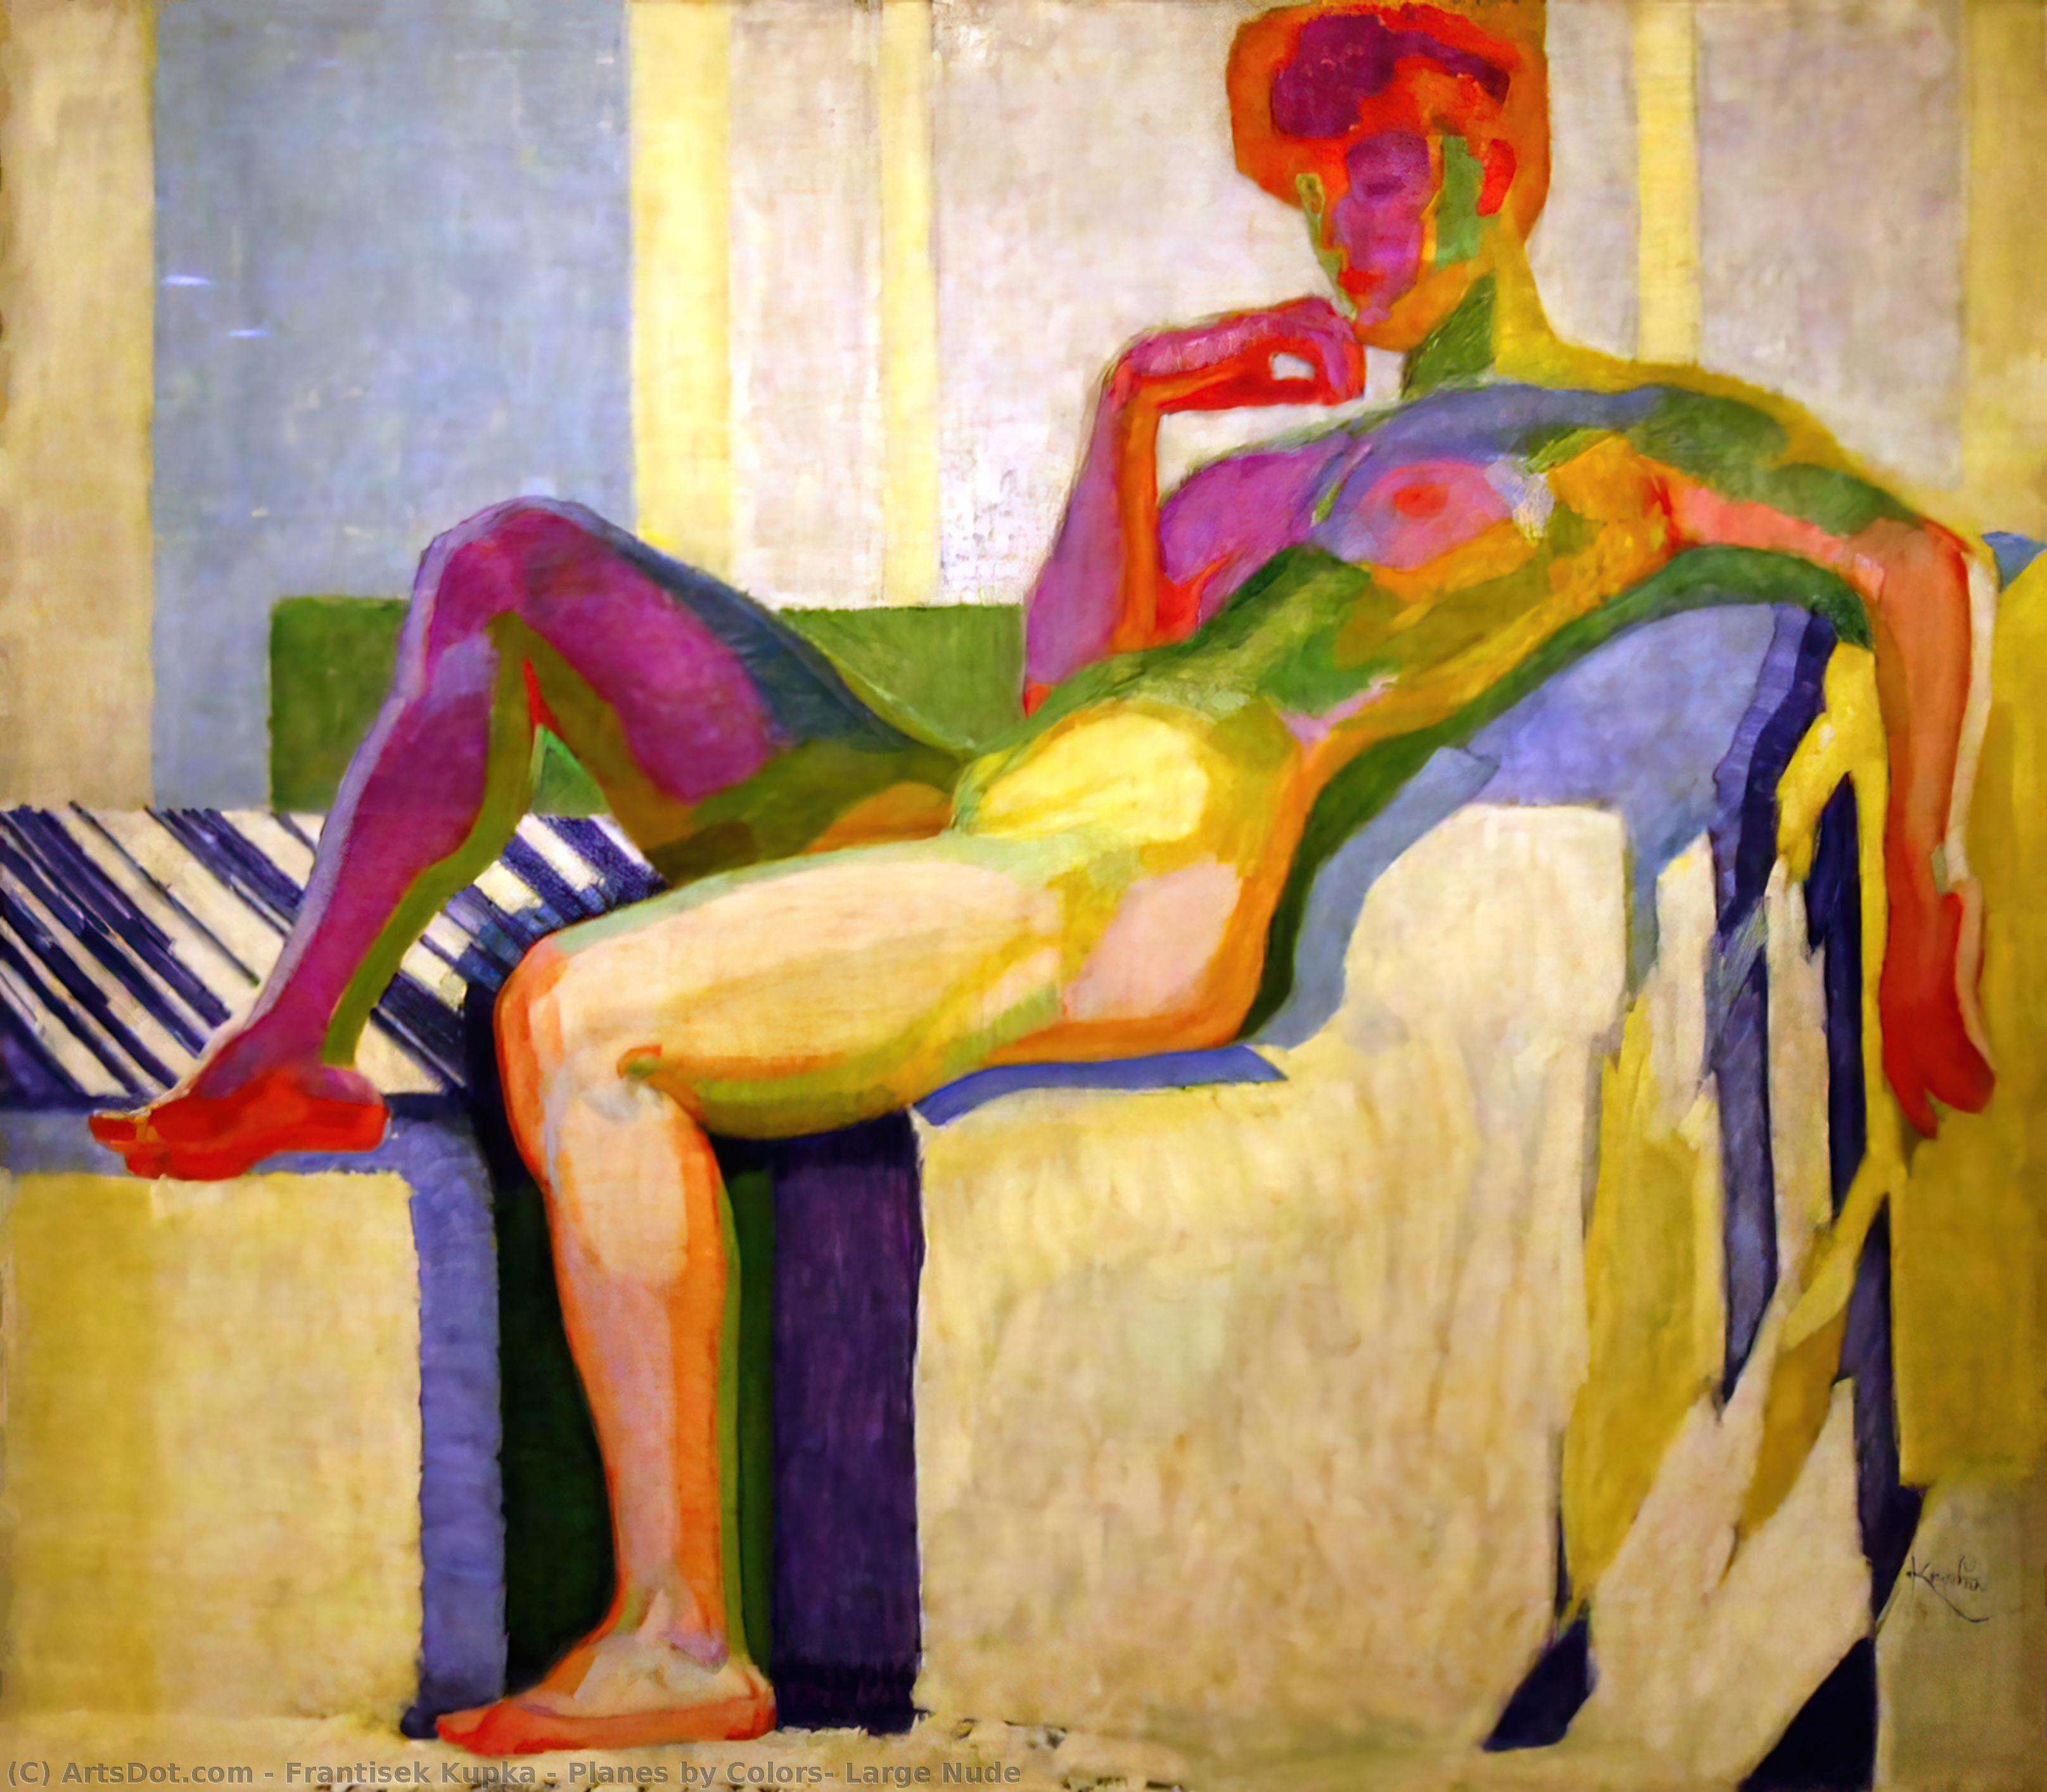 WikiOO.org - Encyclopedia of Fine Arts - Maľba, Artwork Frantisek Kupka - Planes by Colors, Large Nude